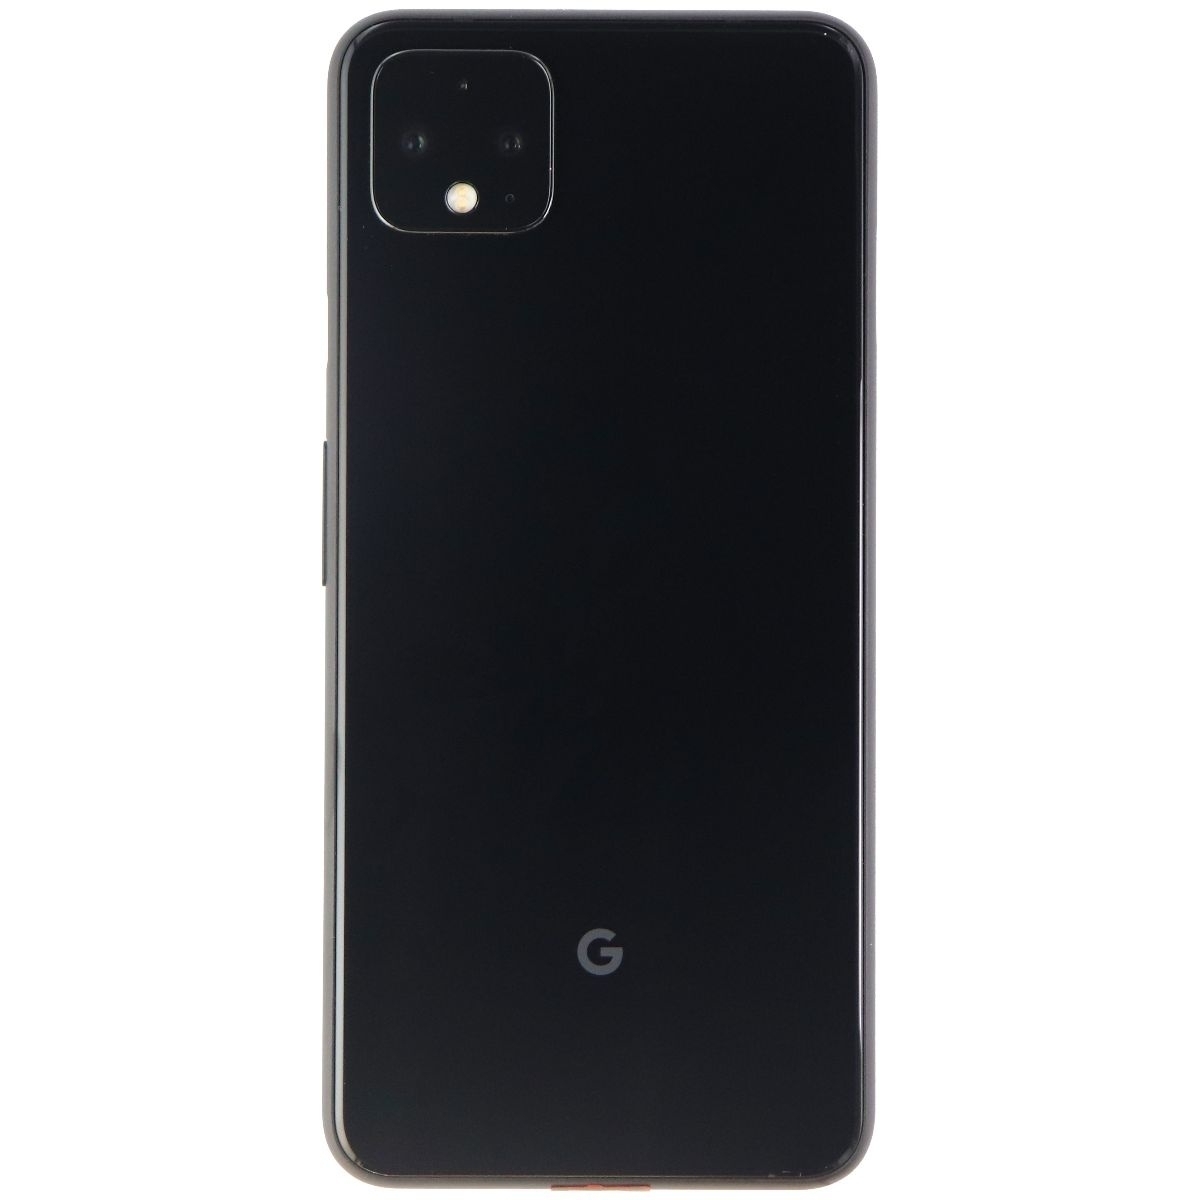 Google Pixel 4 XL (6.3-in) Smartphone (G020J) Verizon ONLY - 128GB / Just Black (Refurbished)